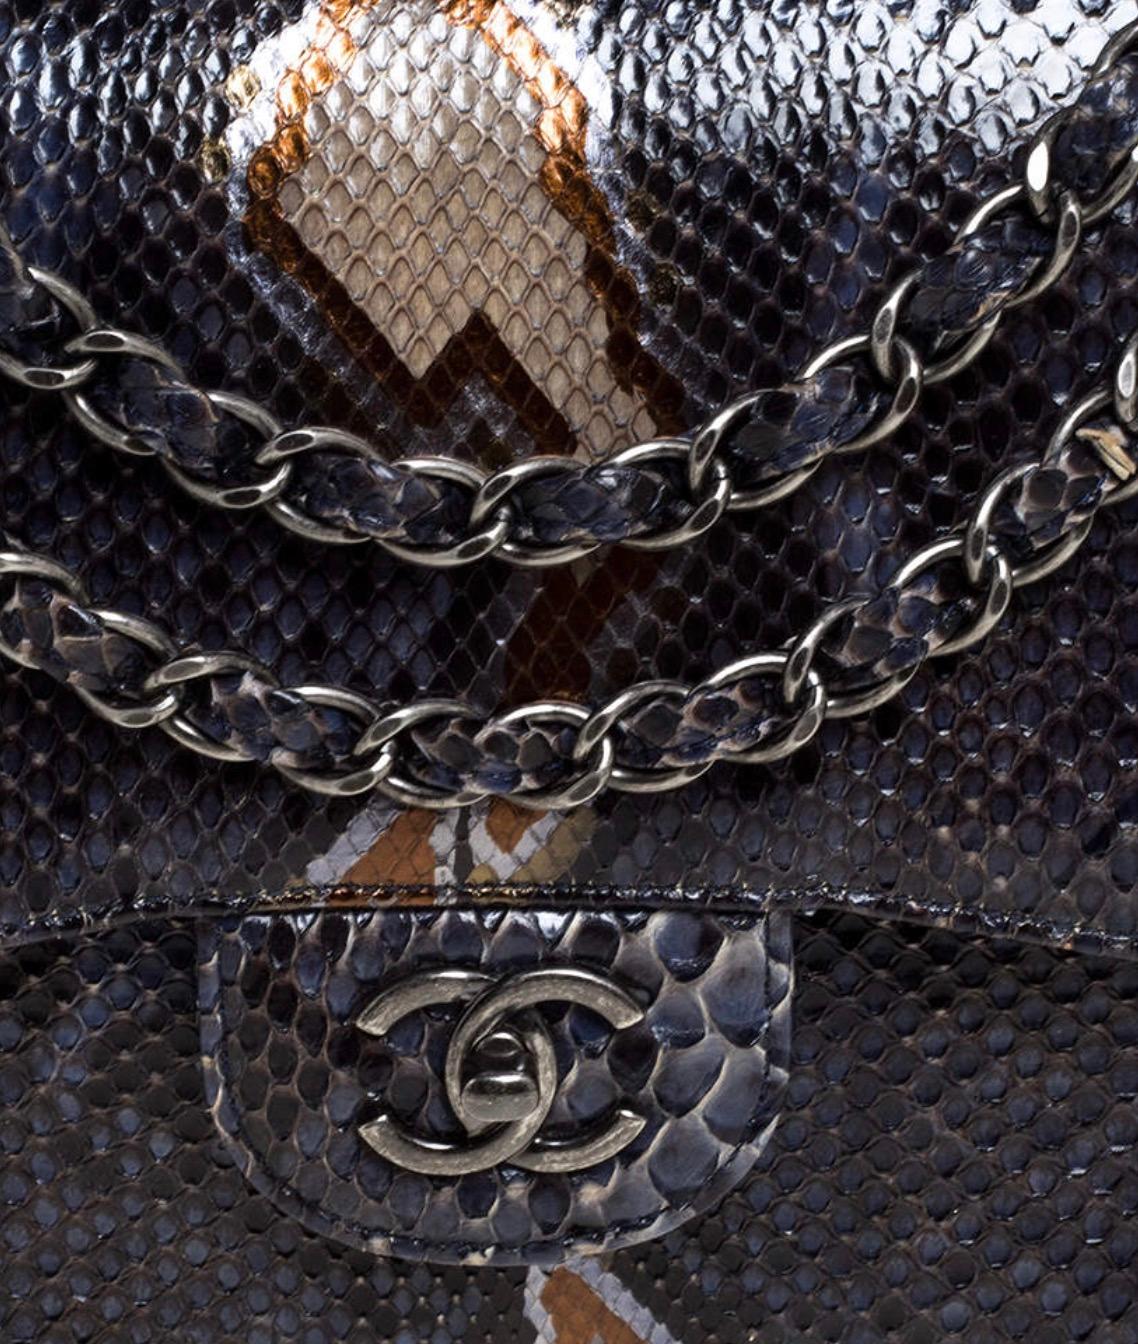 Chanel Metallic Gold Python Boy Small Flap Bag